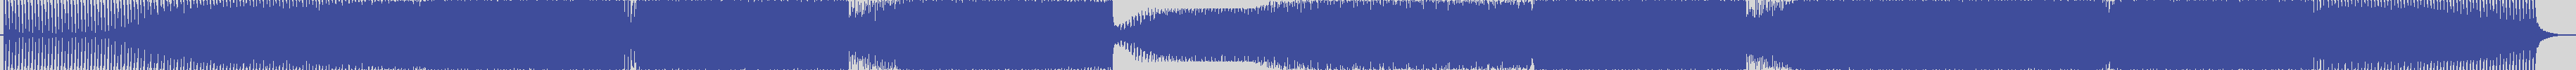 atomic_recordings [AR010] Robbie Rivera, Pink Fluid - Da Da Dance [Pink Fluid Mix] audio wave form